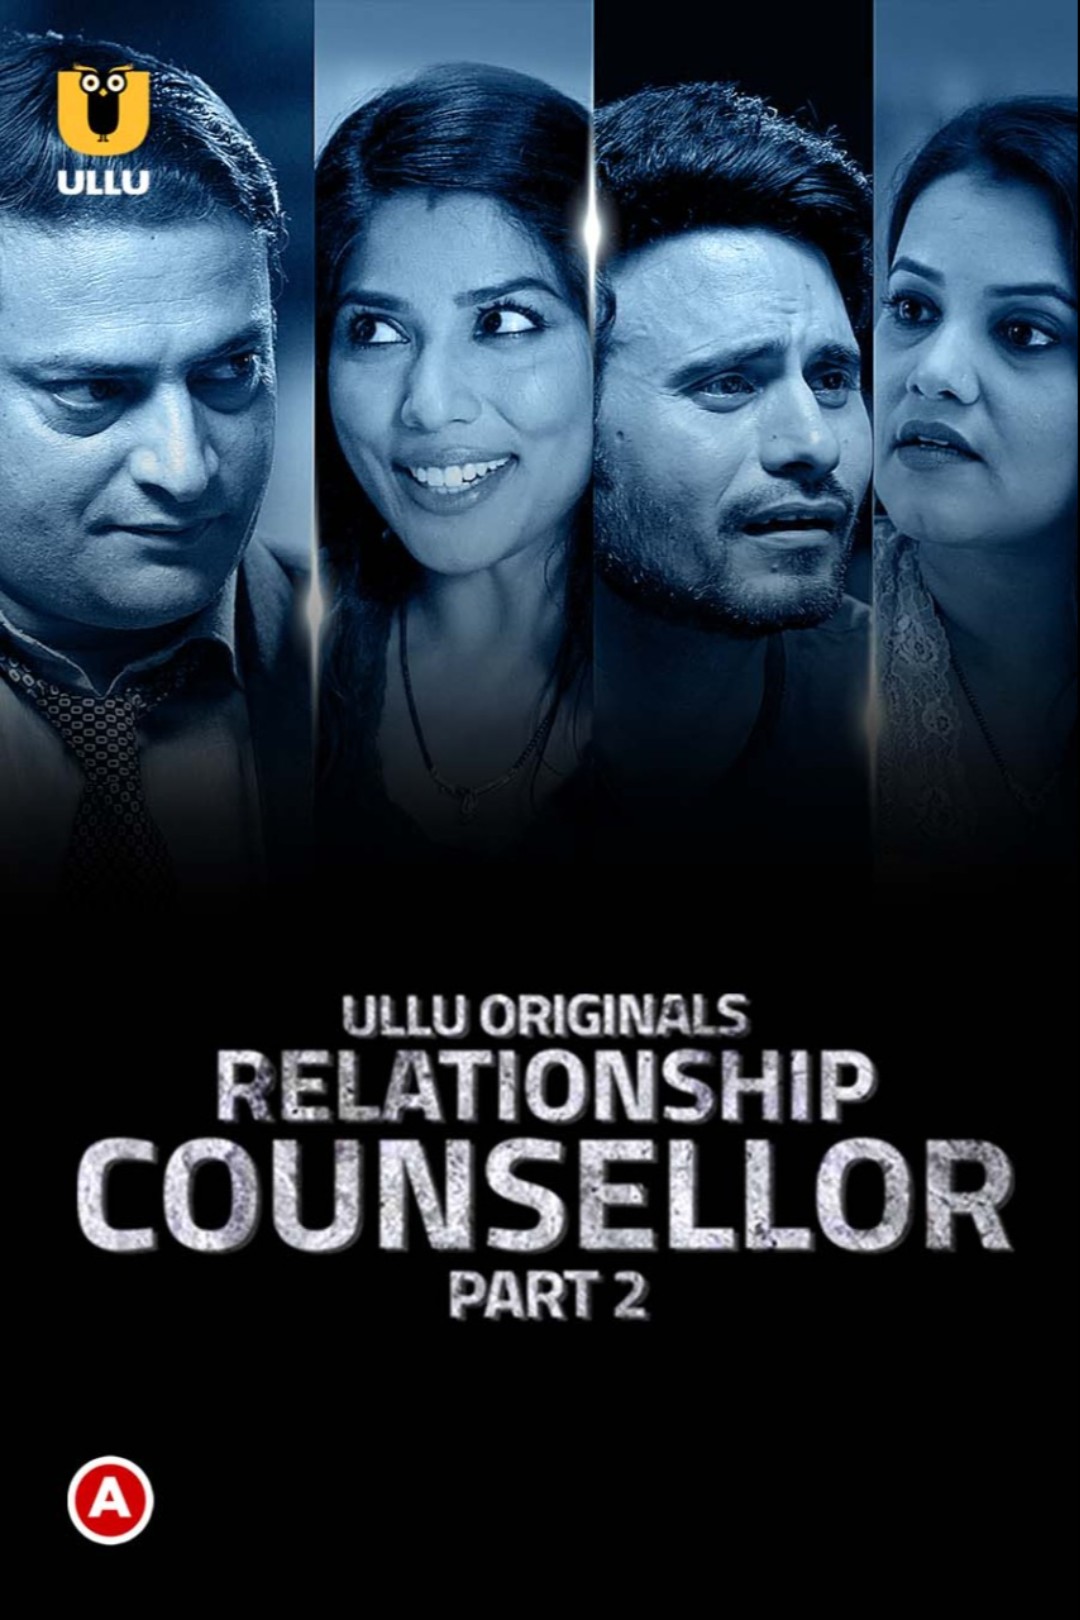 Relationship Counsellor (Part 2) 2021 S01 Hindi Ullu Originals Complete Web Series Download | HDRip | 1080p | 720p | 480p – 790MB | 390MB | 200MB